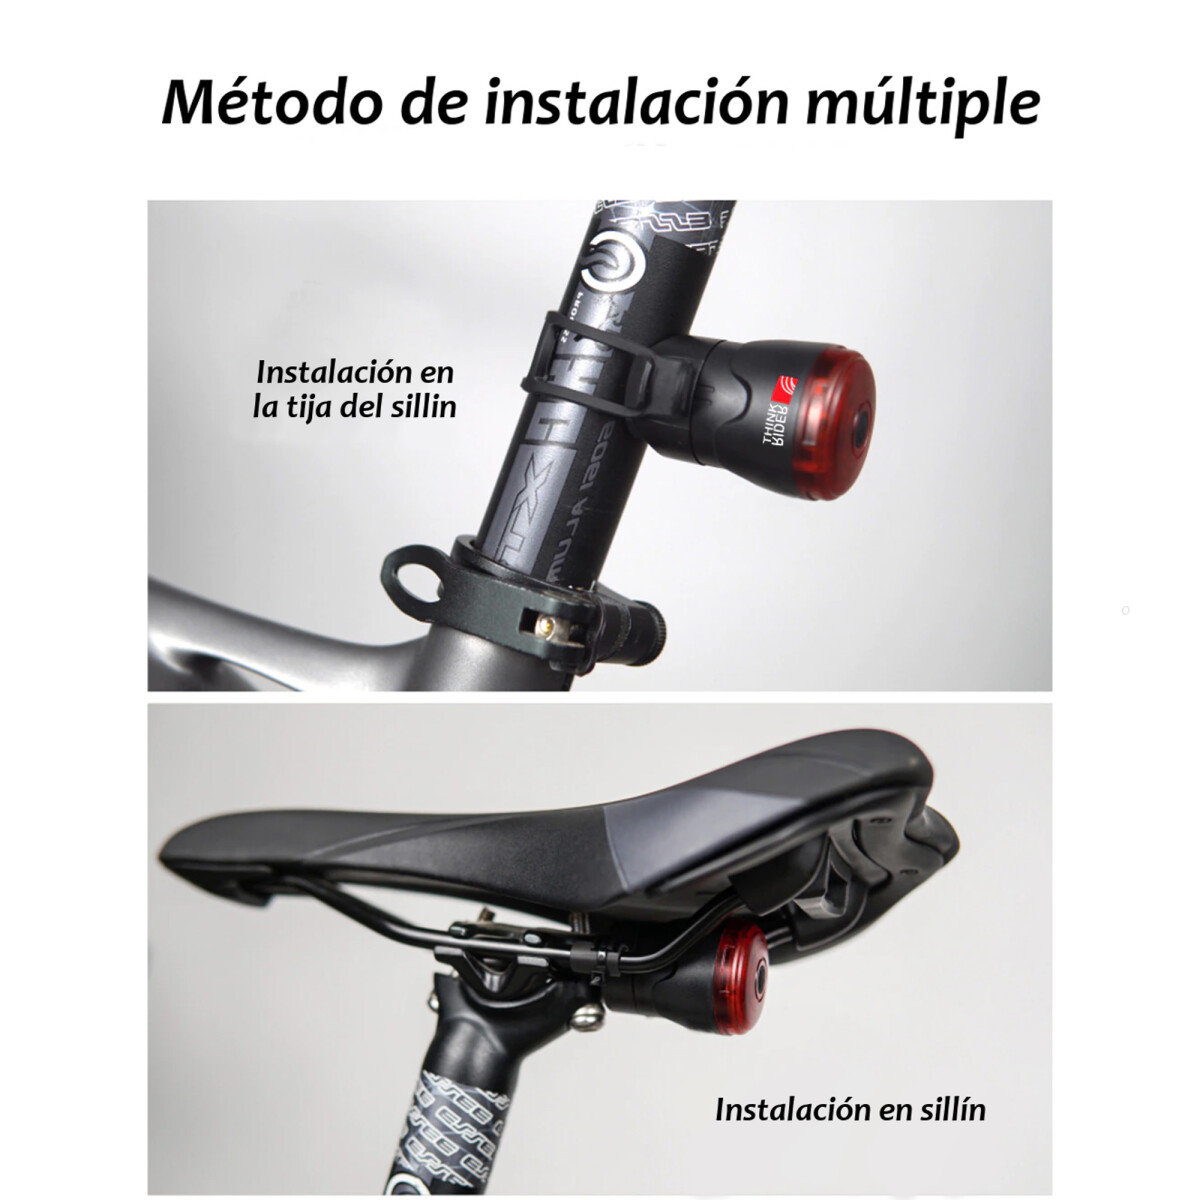 Thinkrider Luz Led Trasera Inteligente para Bicicleta con Sensor de Freno. Resistente al Agua IPX6. - 001 